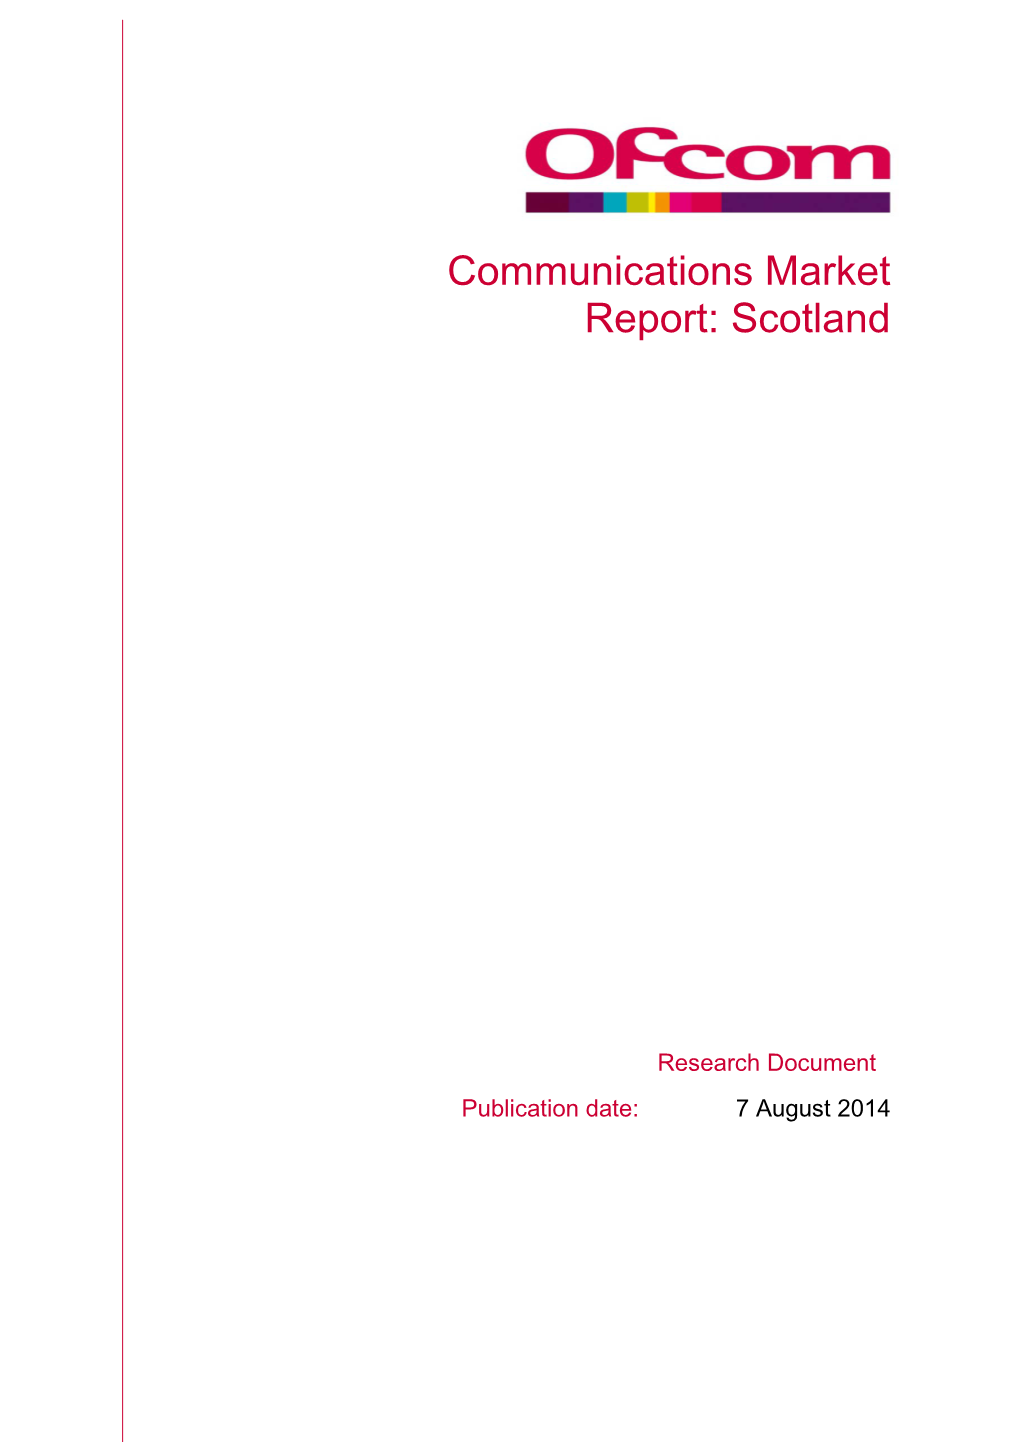 The Communications Market Report 2014: Scotland